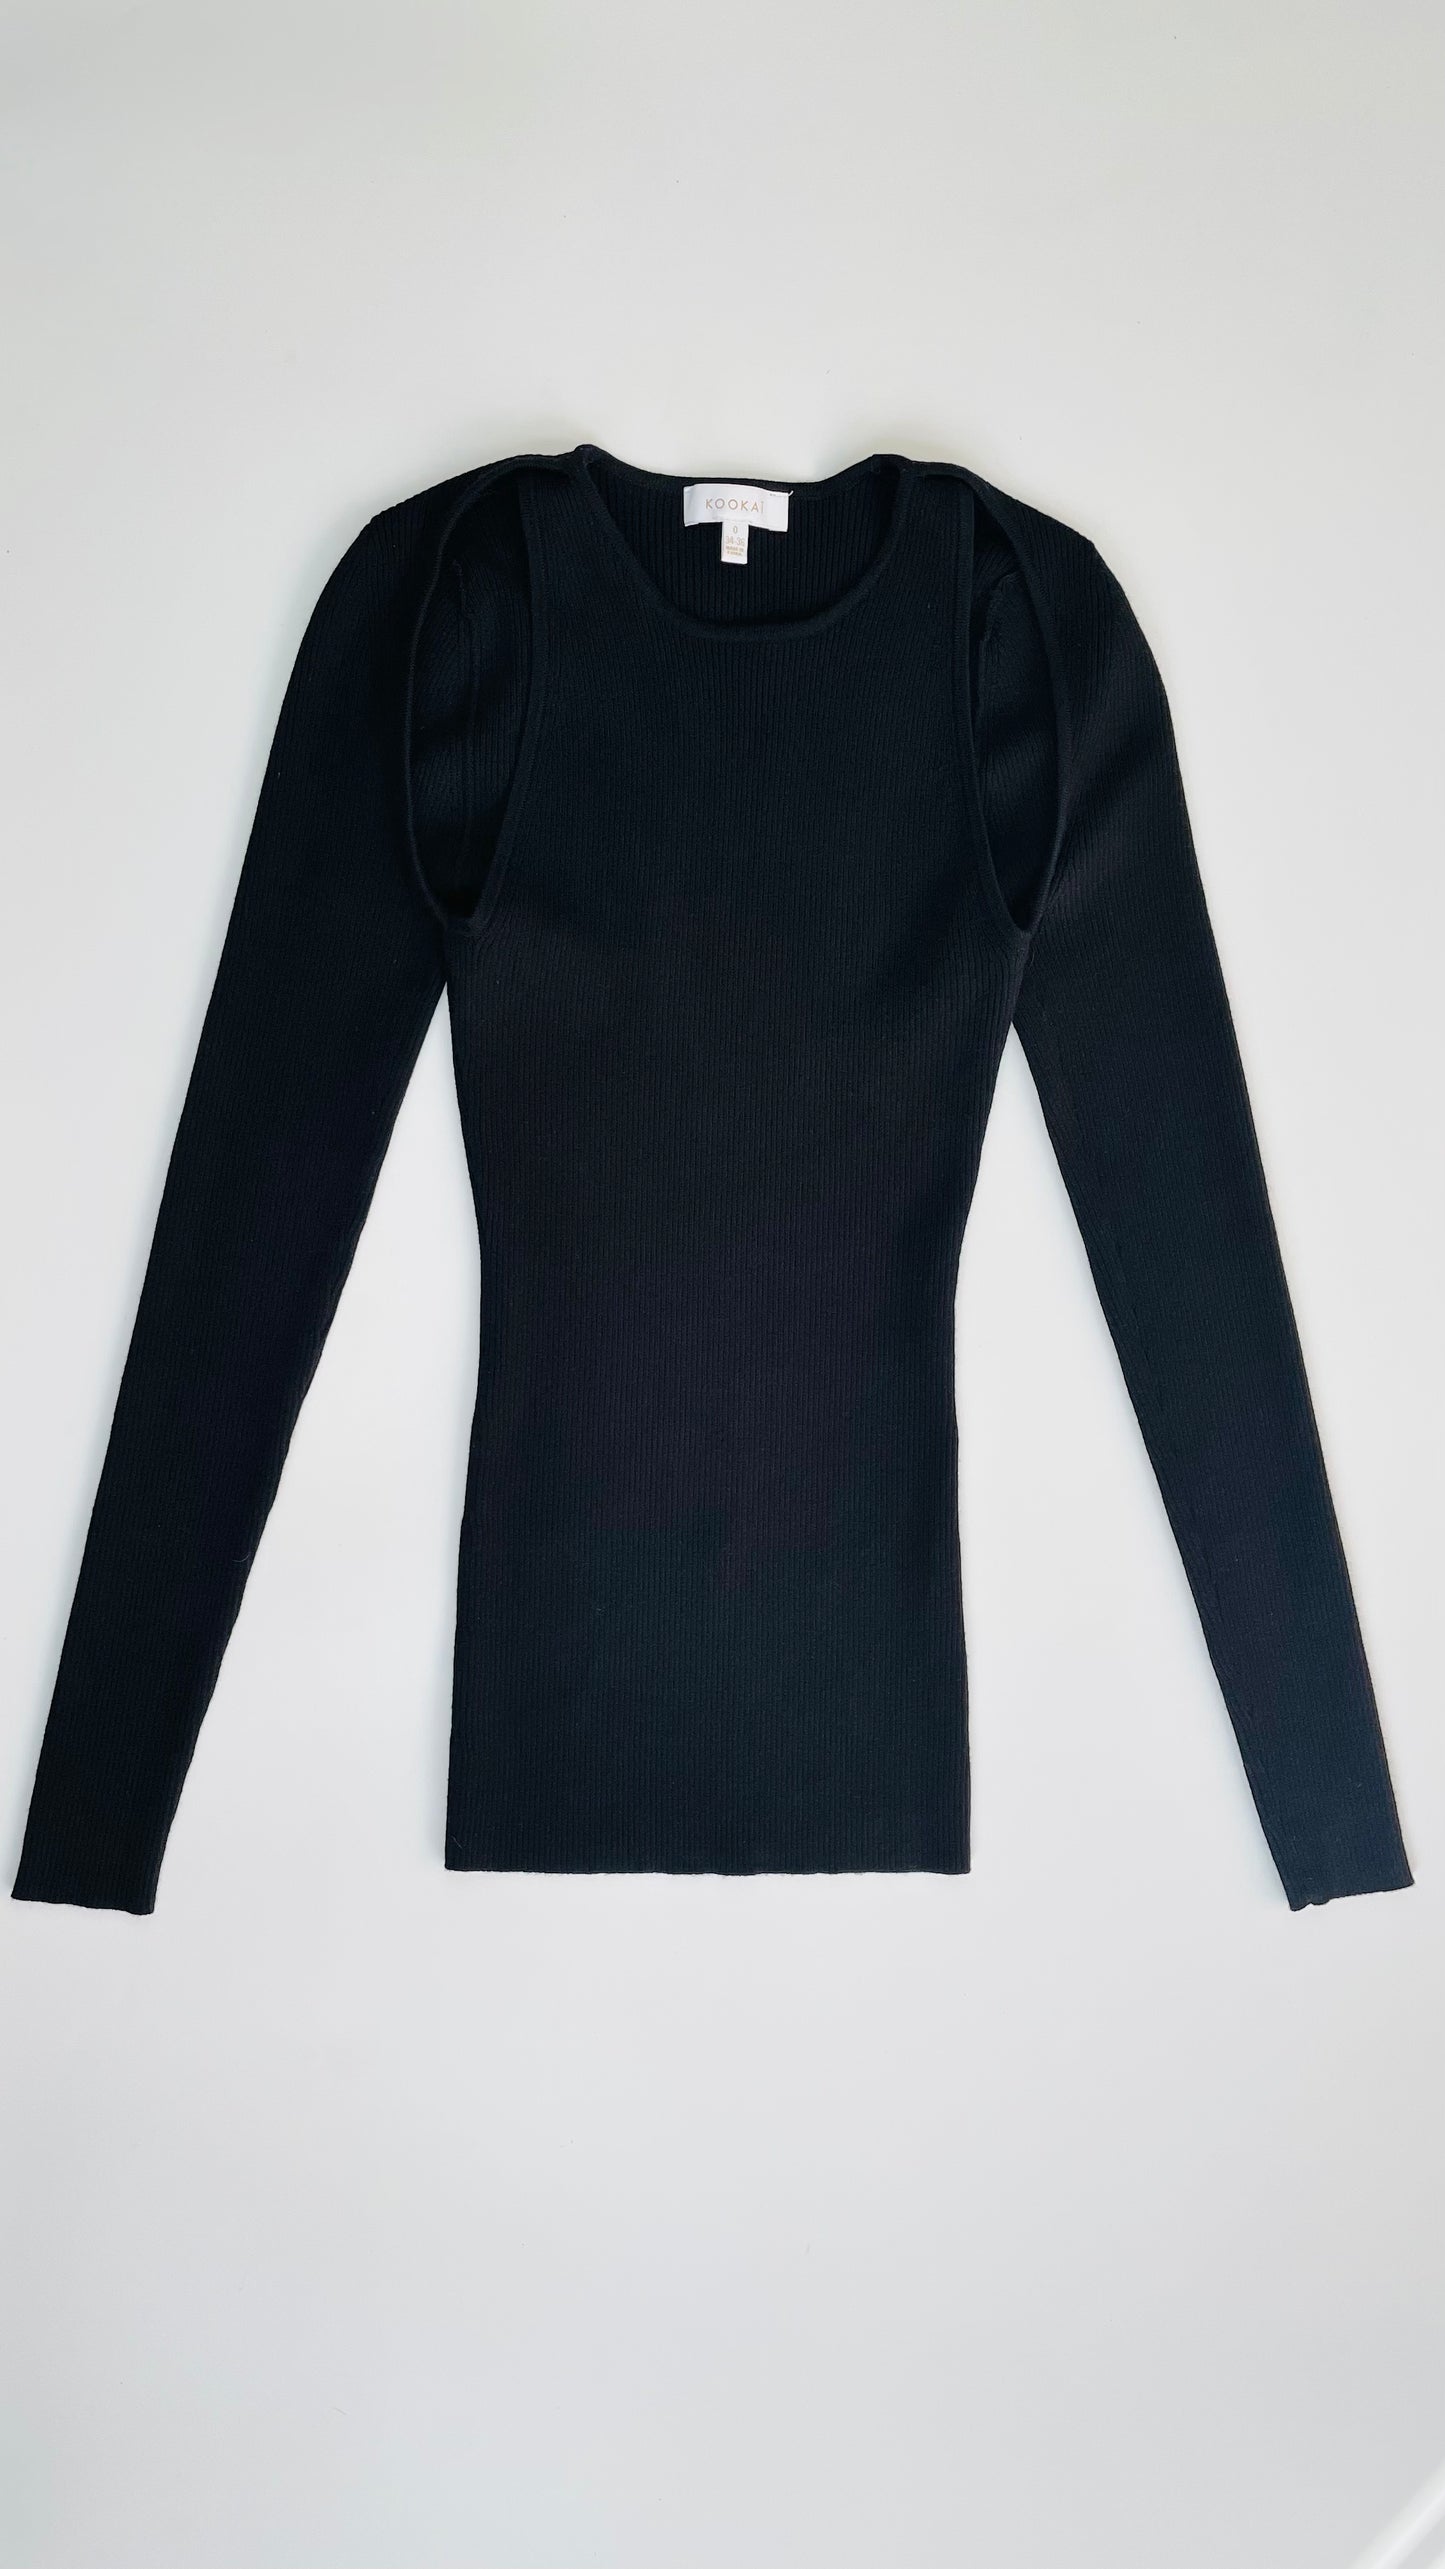 Pre-Loved KOOKAI black long sleeve rib knit top - Size 0